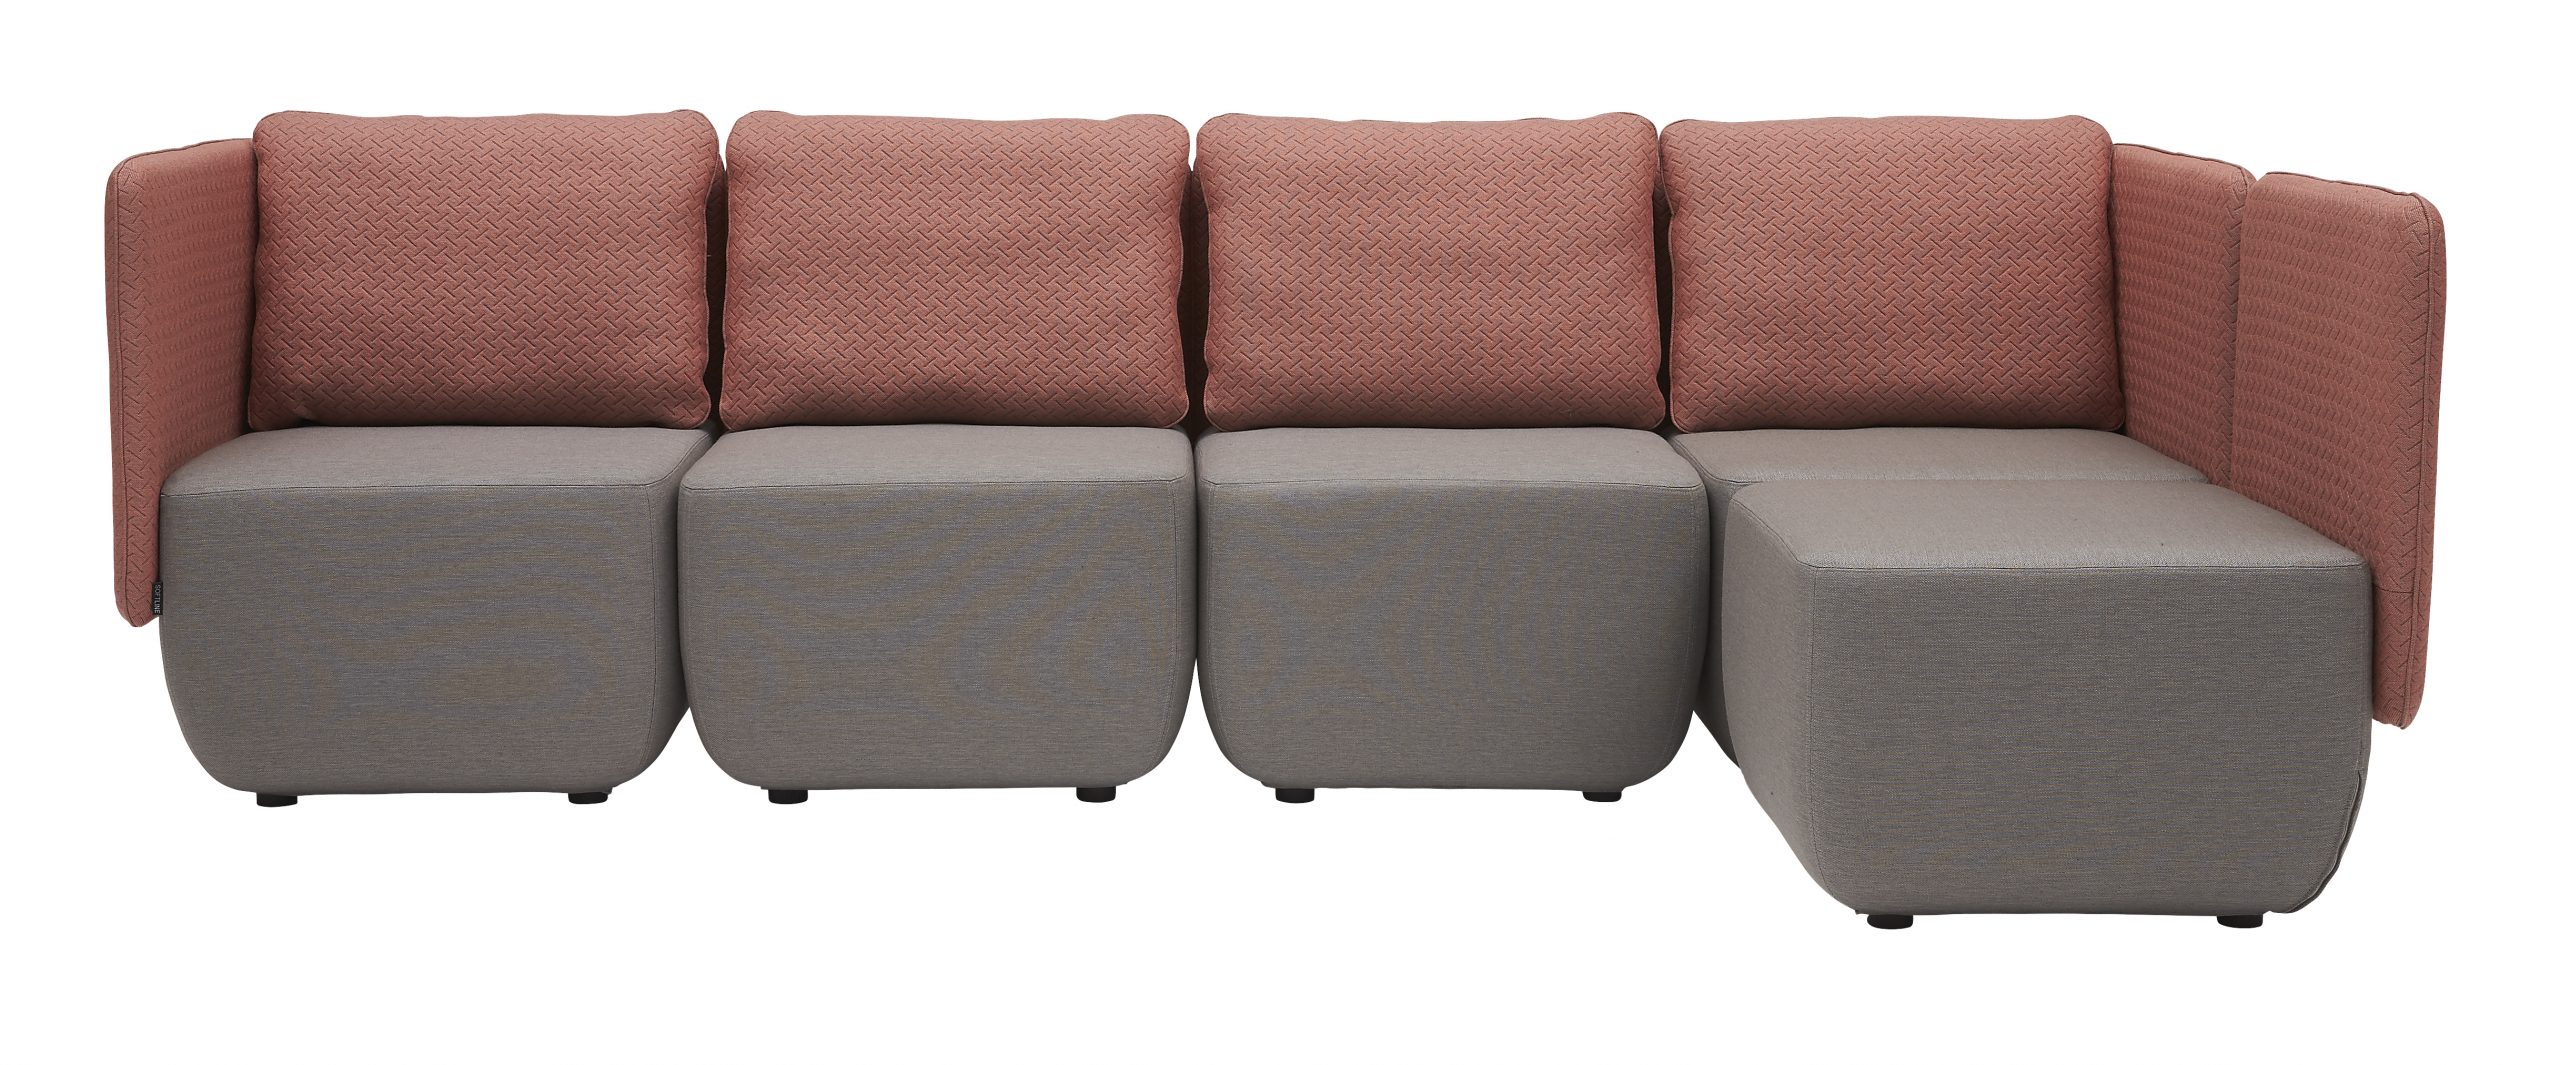 opera-modular-sofa-high-res-26-scaled.jpg